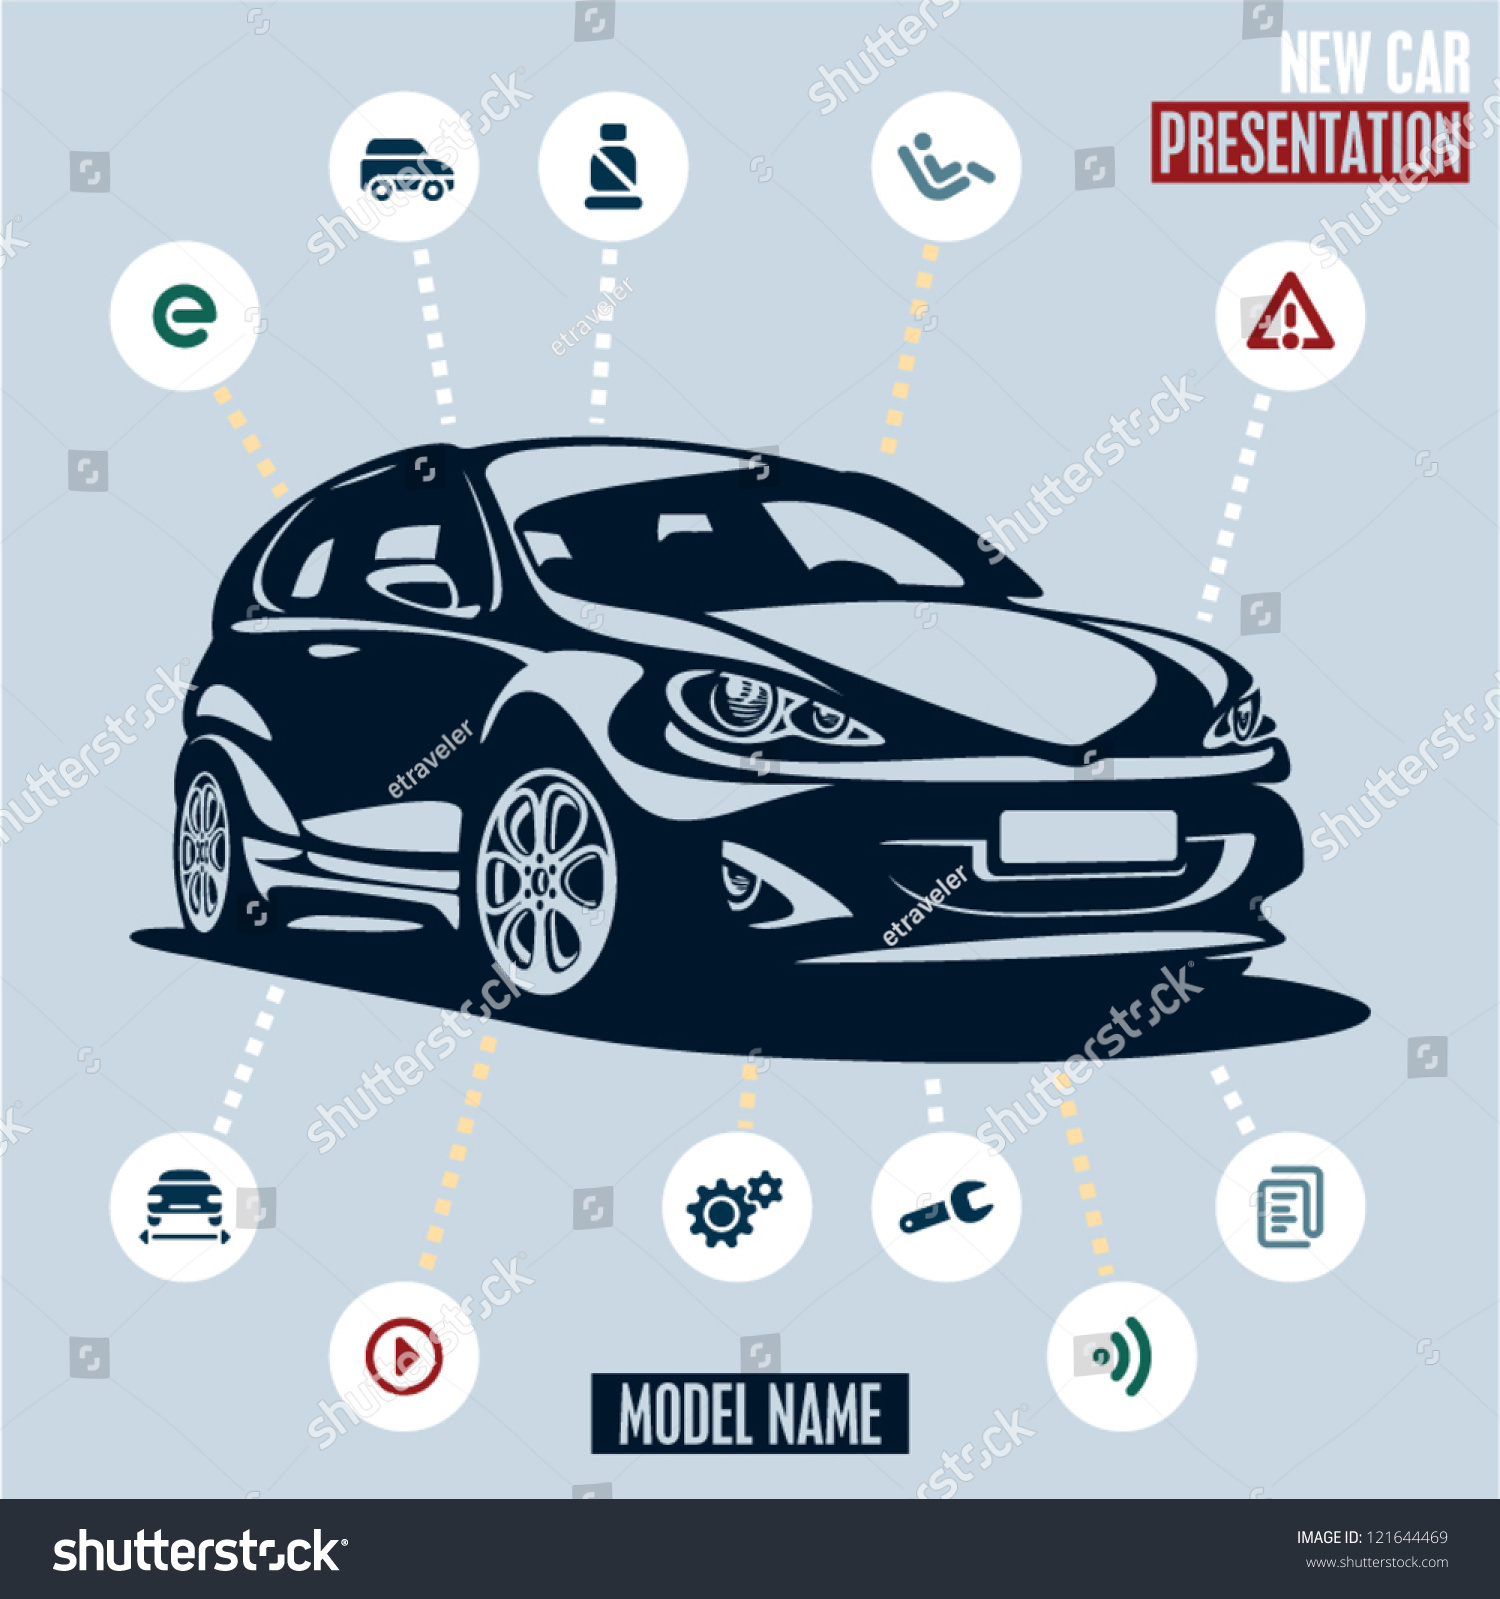 SVG of Car presentation. Main car icons set. svg